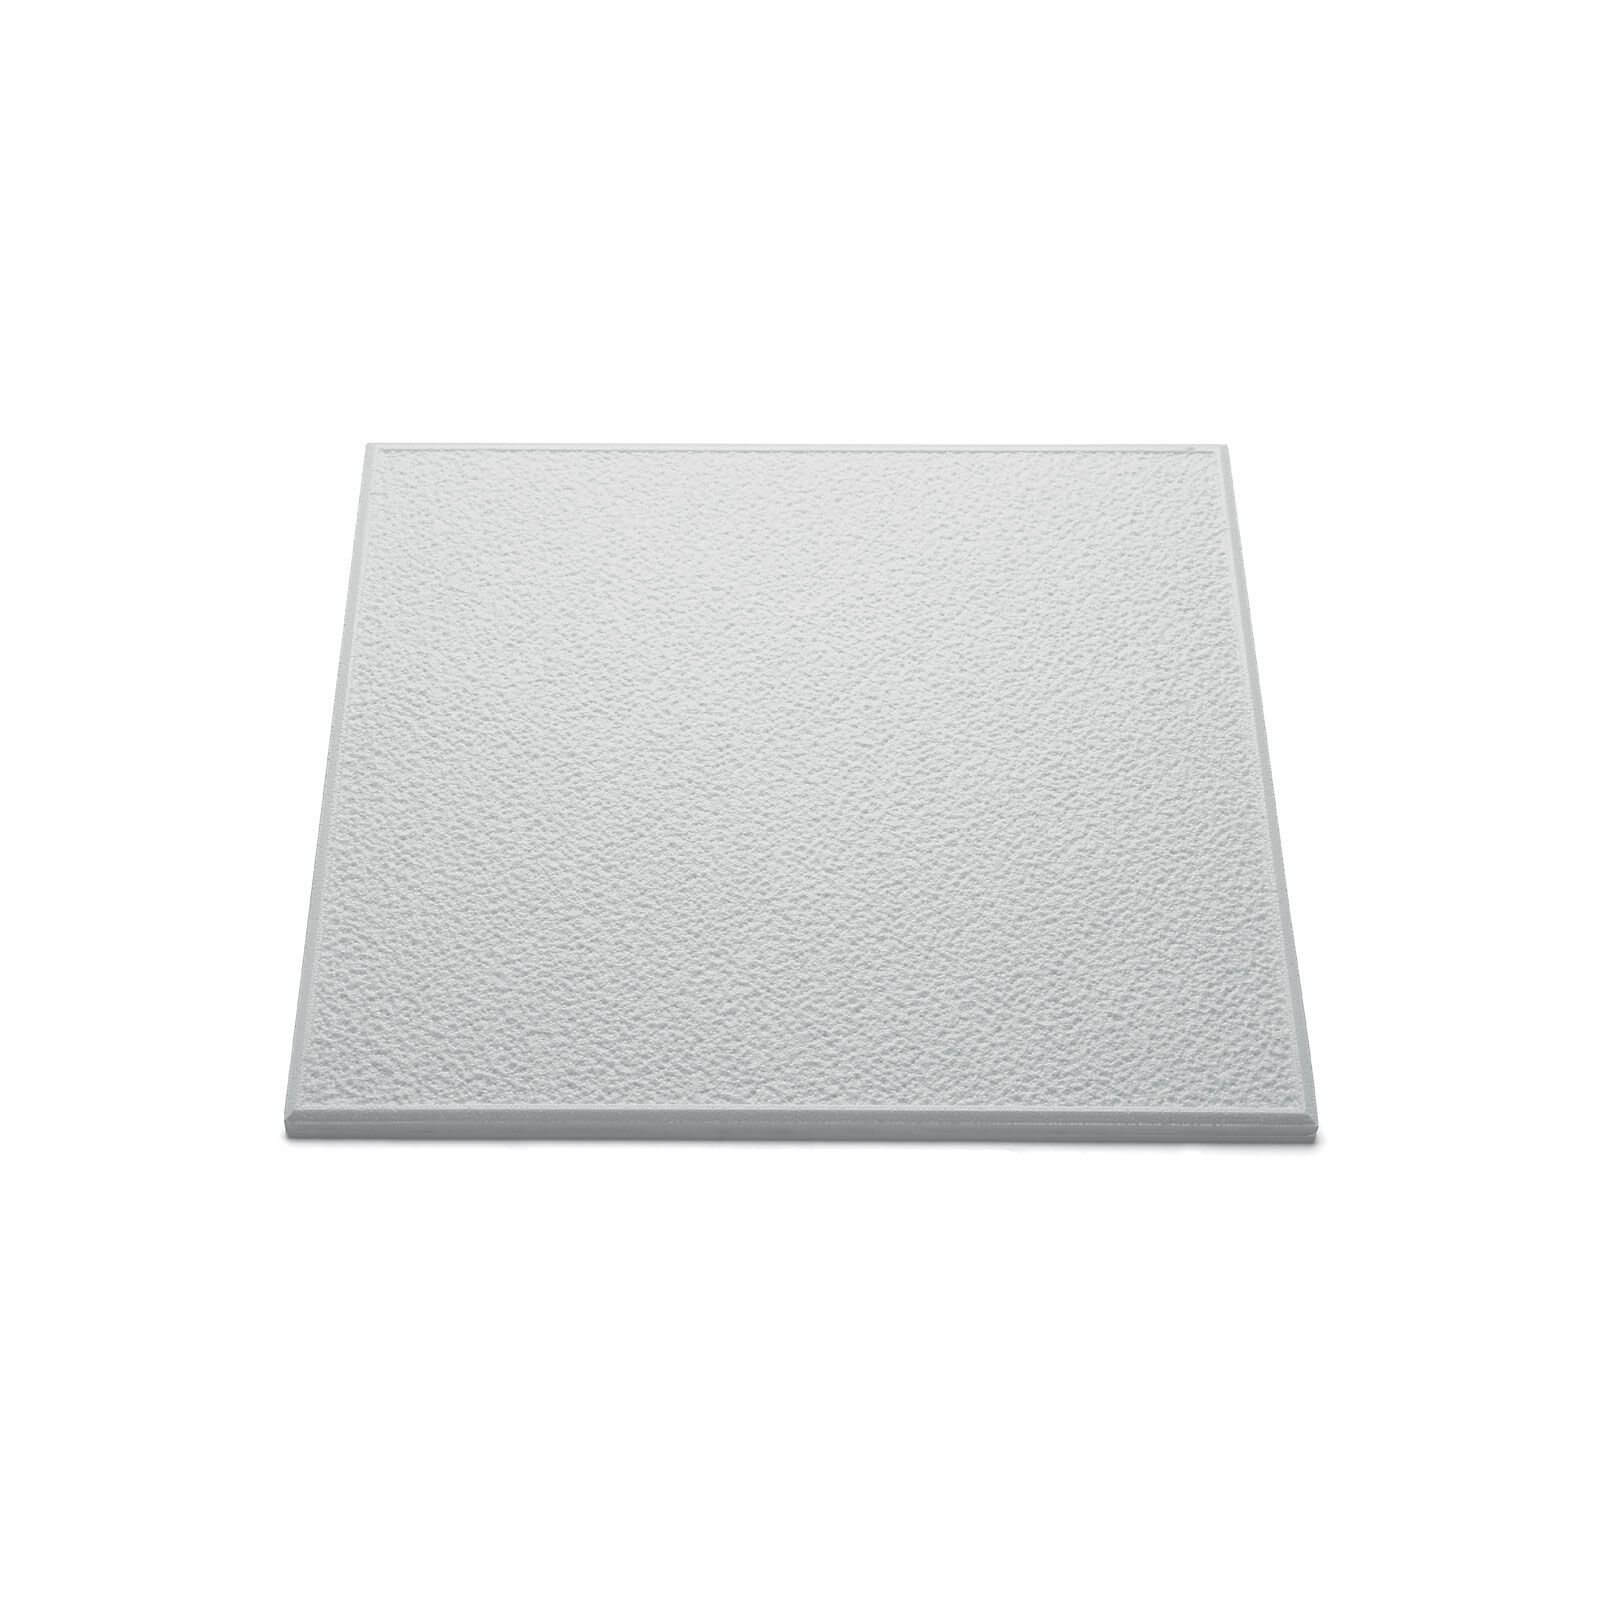 Stipple Ceiling Tiles White - Coverage 2sq m - 8 Pack